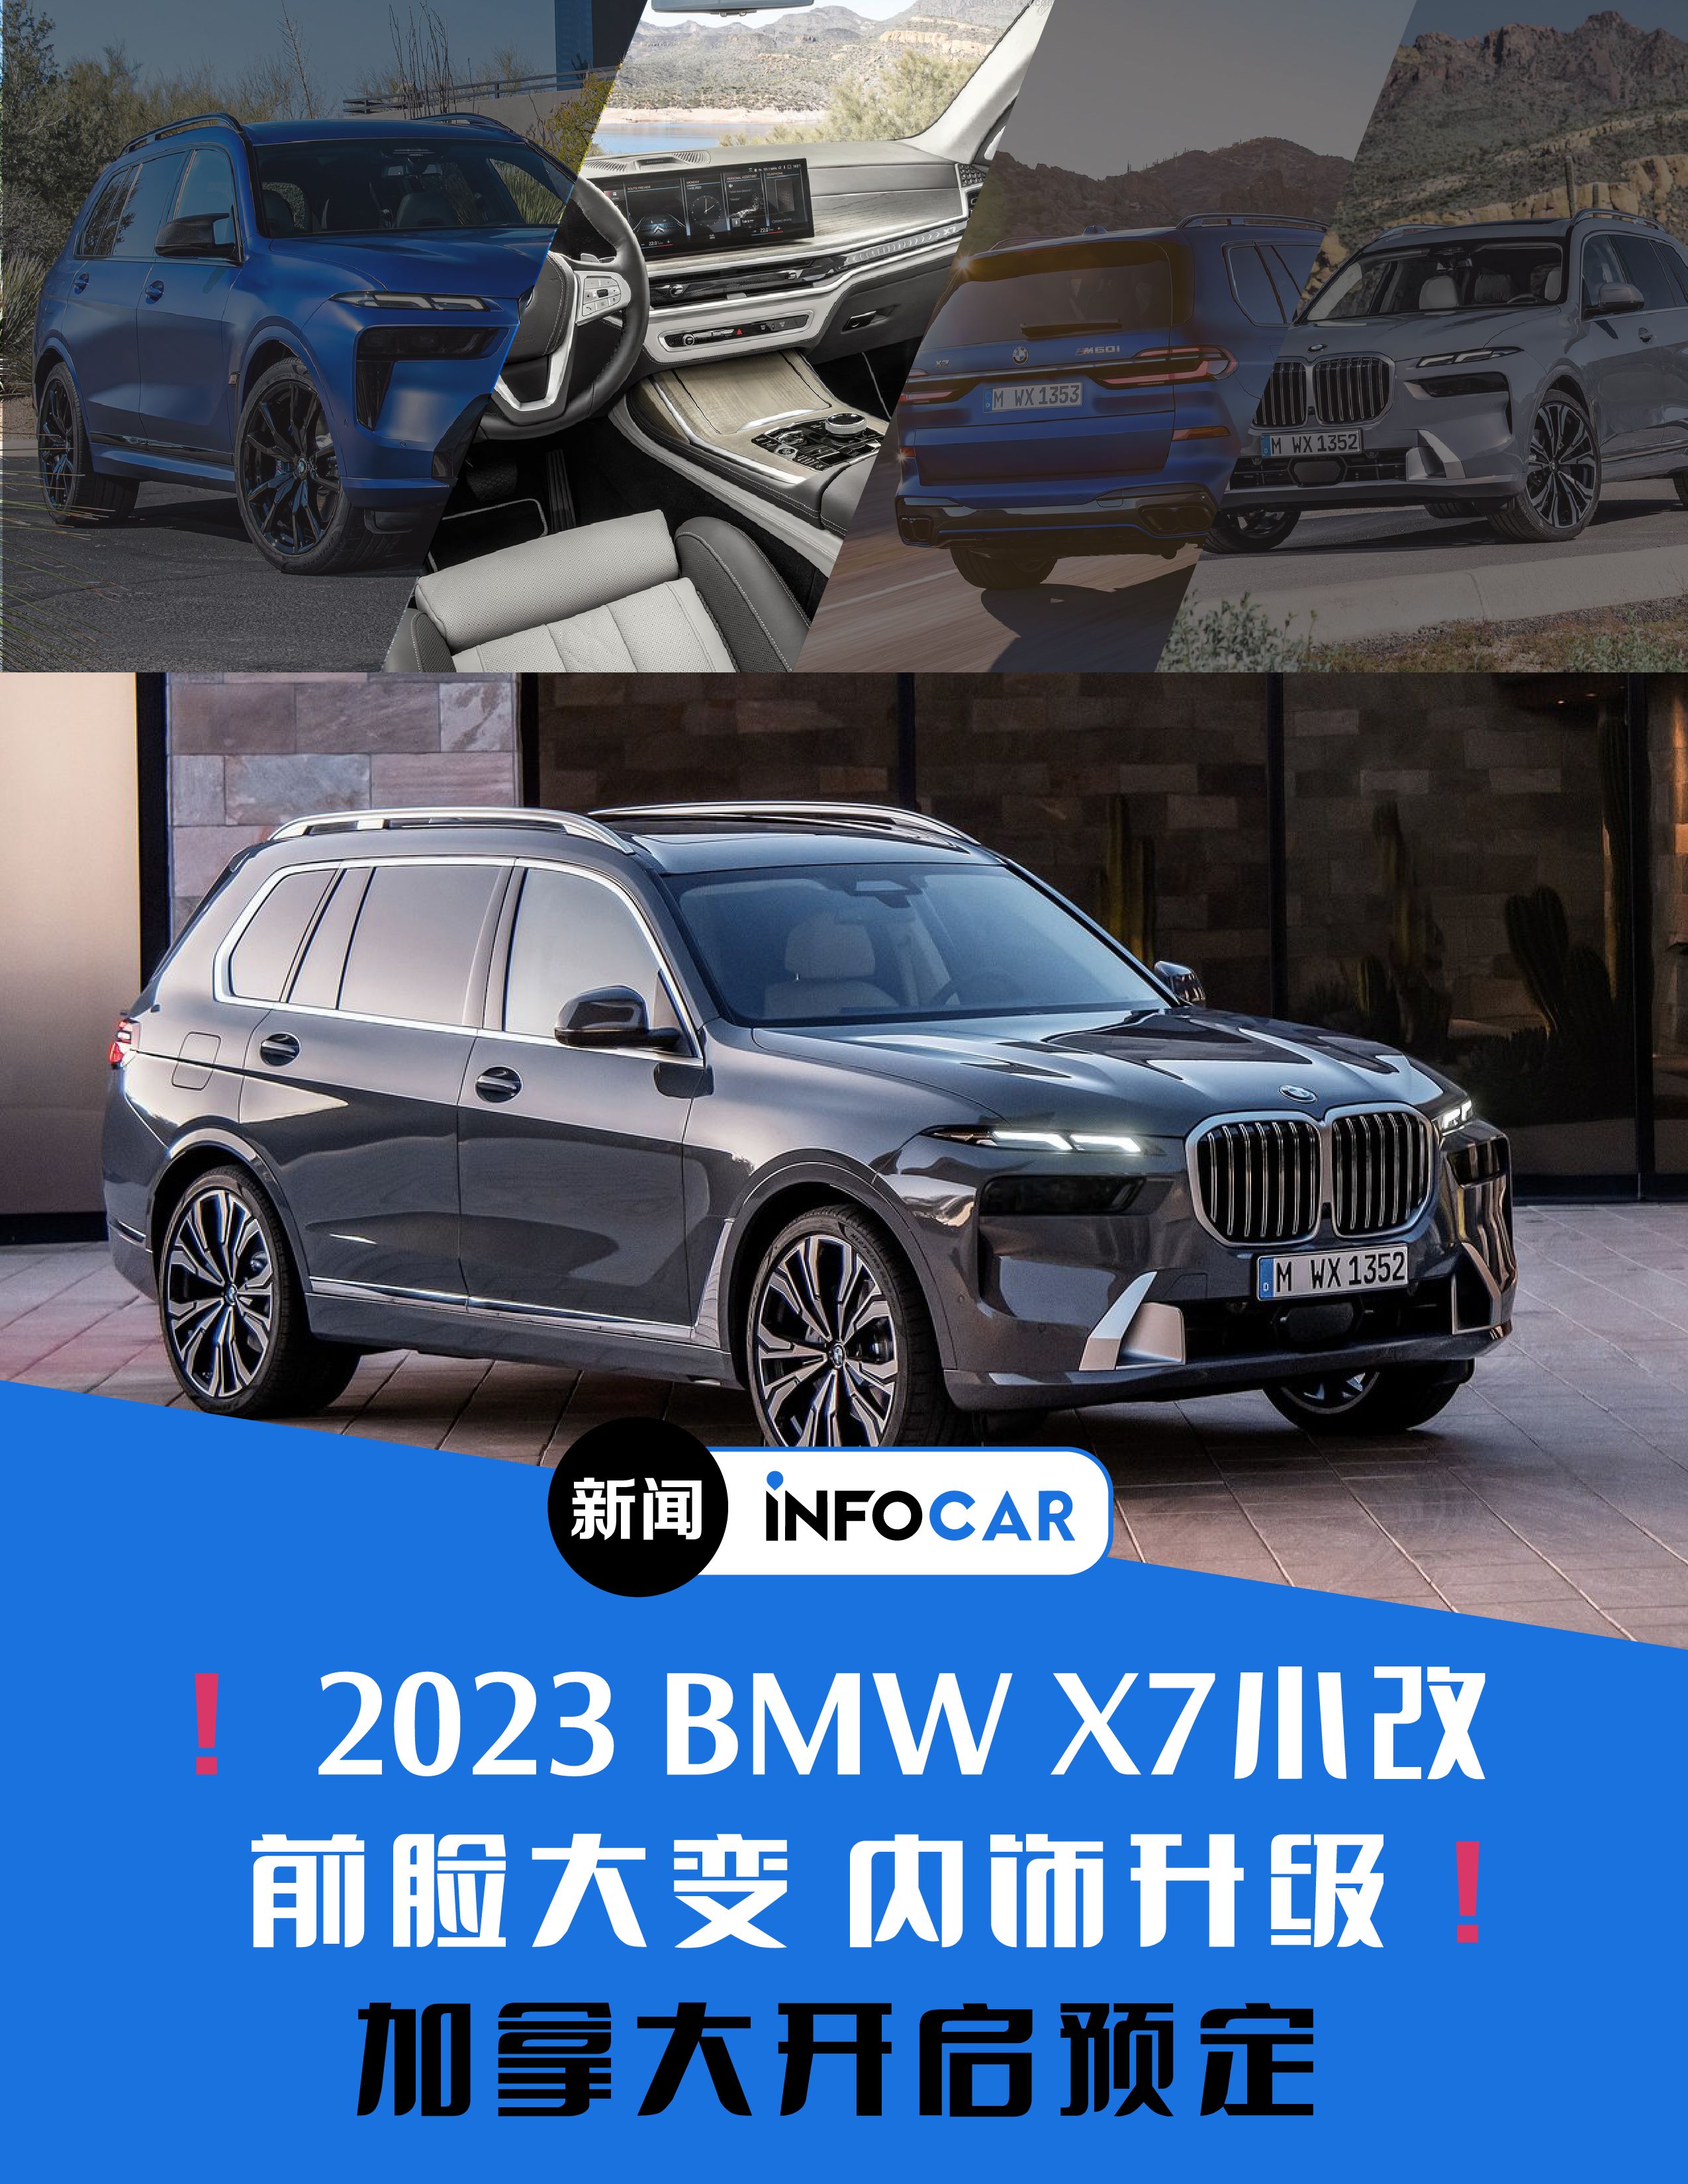 Infocar -INFOCAR车闻：BMWX7 Facelift 推出小改款车型，前脸大变，内饰升级